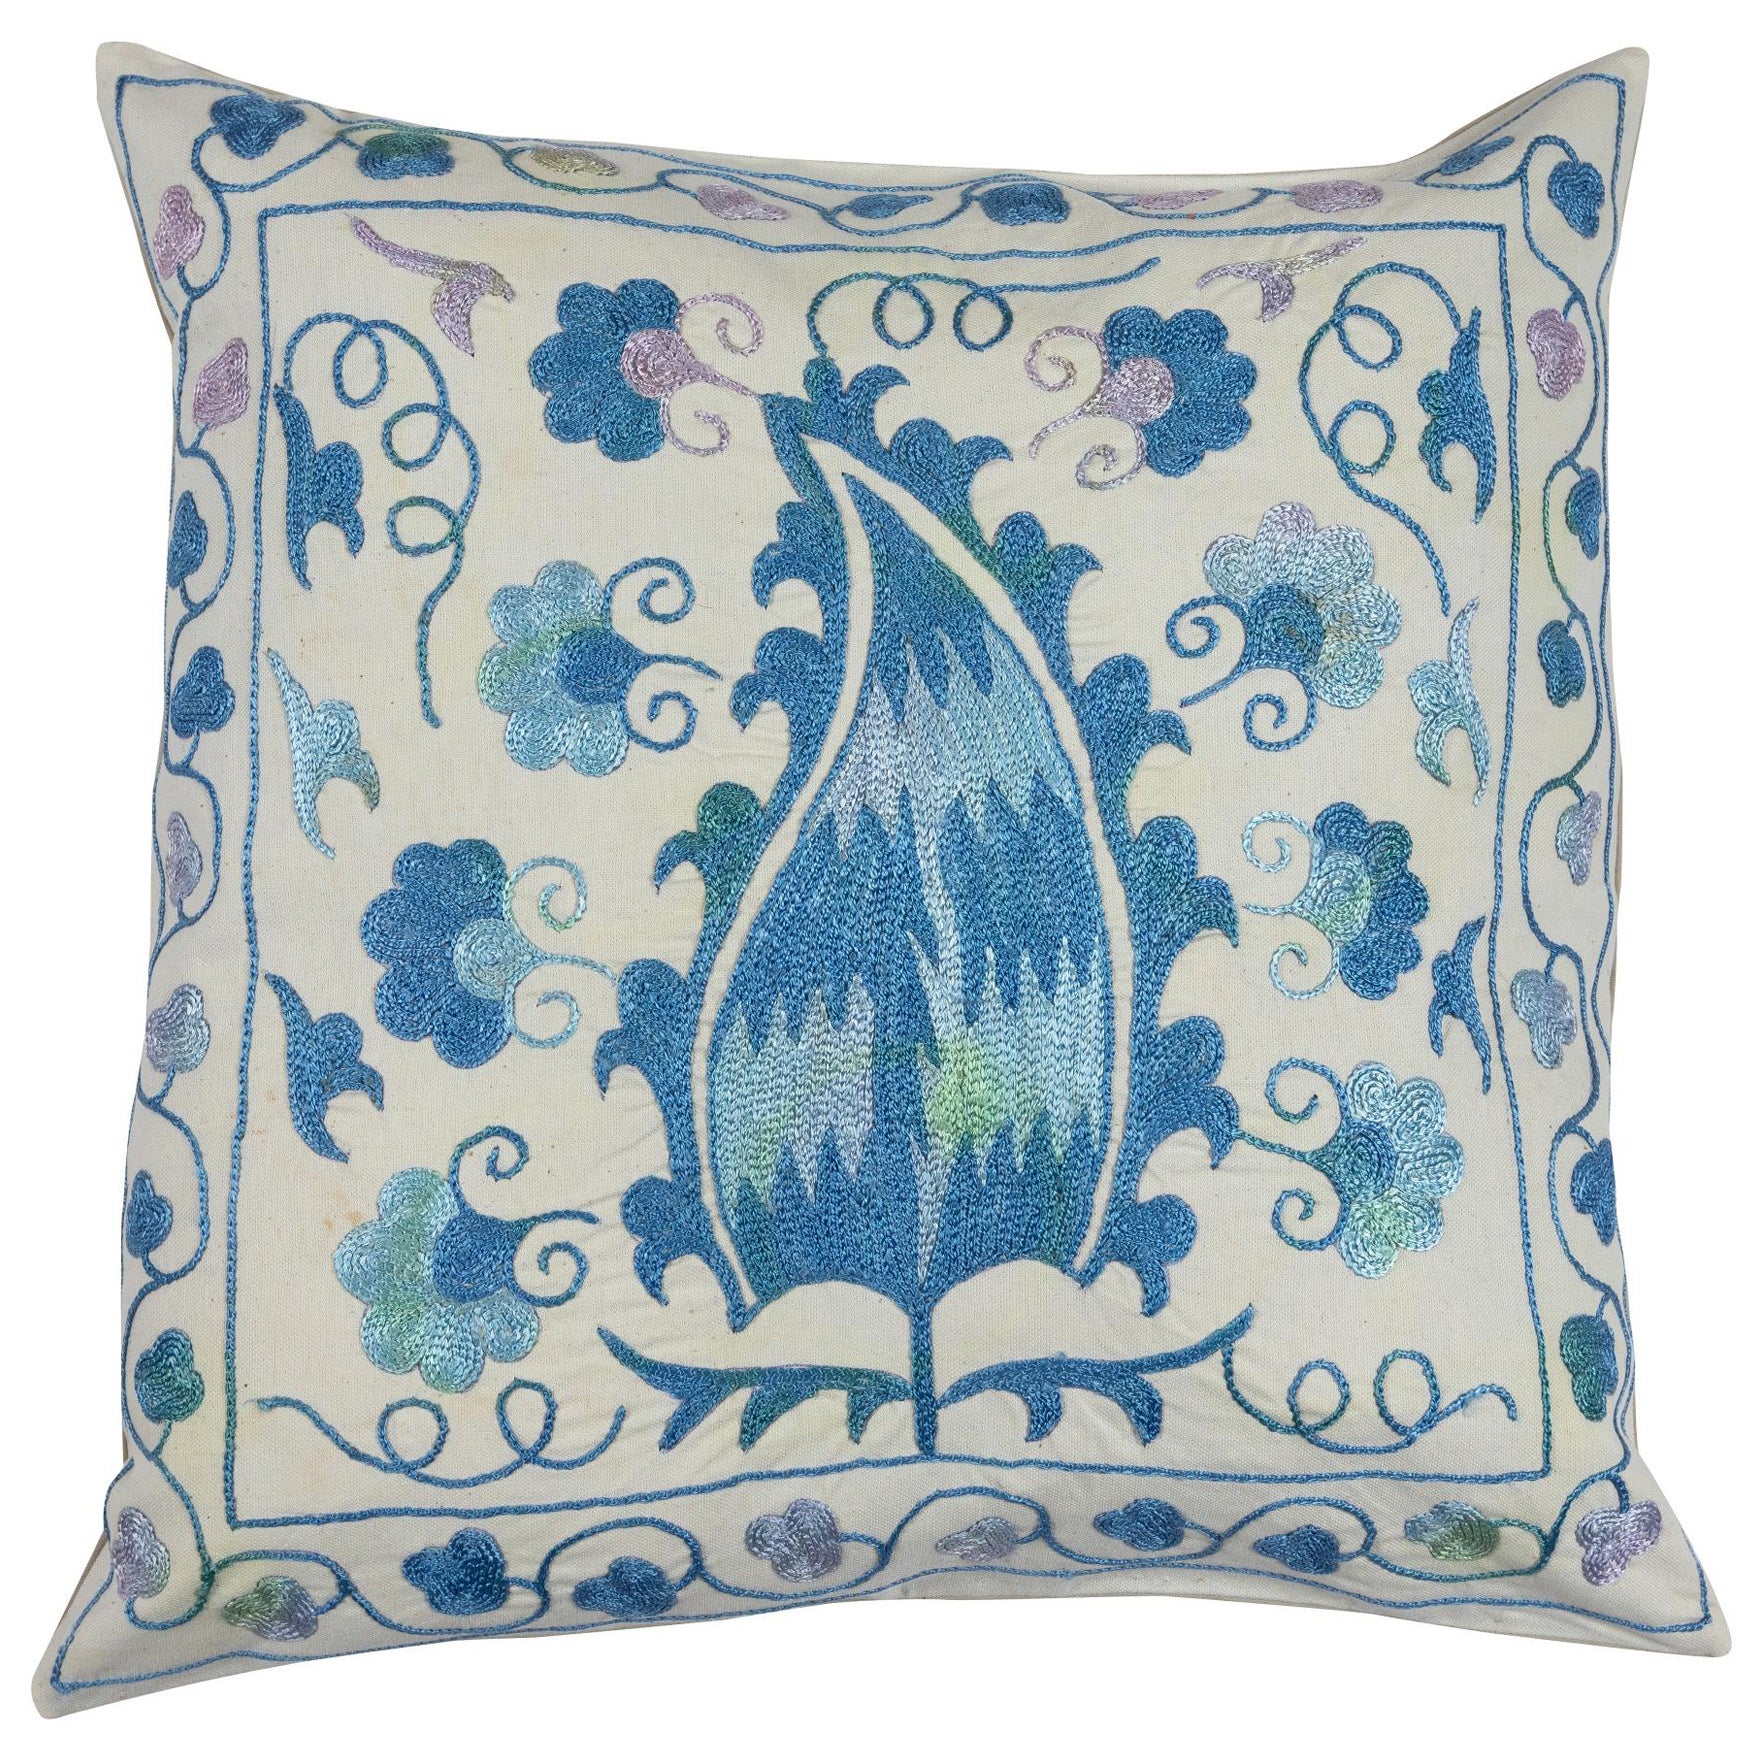 18"x18" Silk Embroidery Cushion Cover, Blue & Cream Lace Pillow, Uzbek Sham For Sale